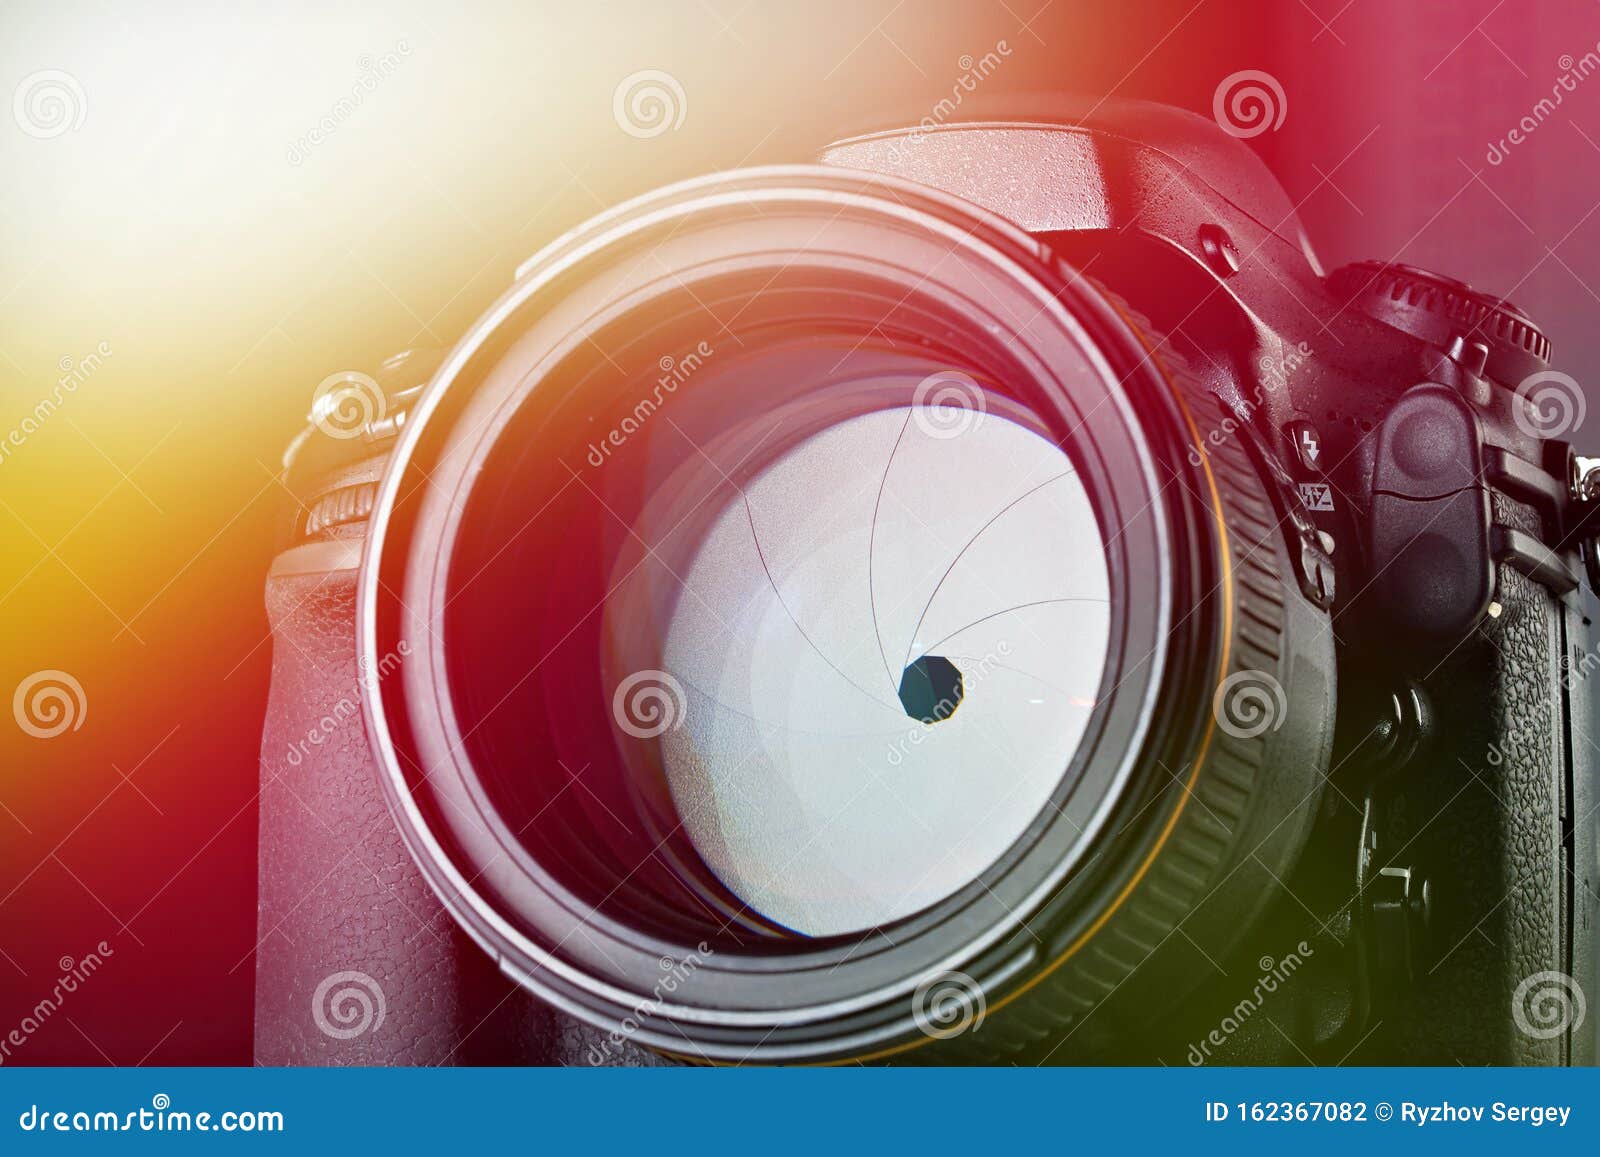 dslr camera with aperture lens